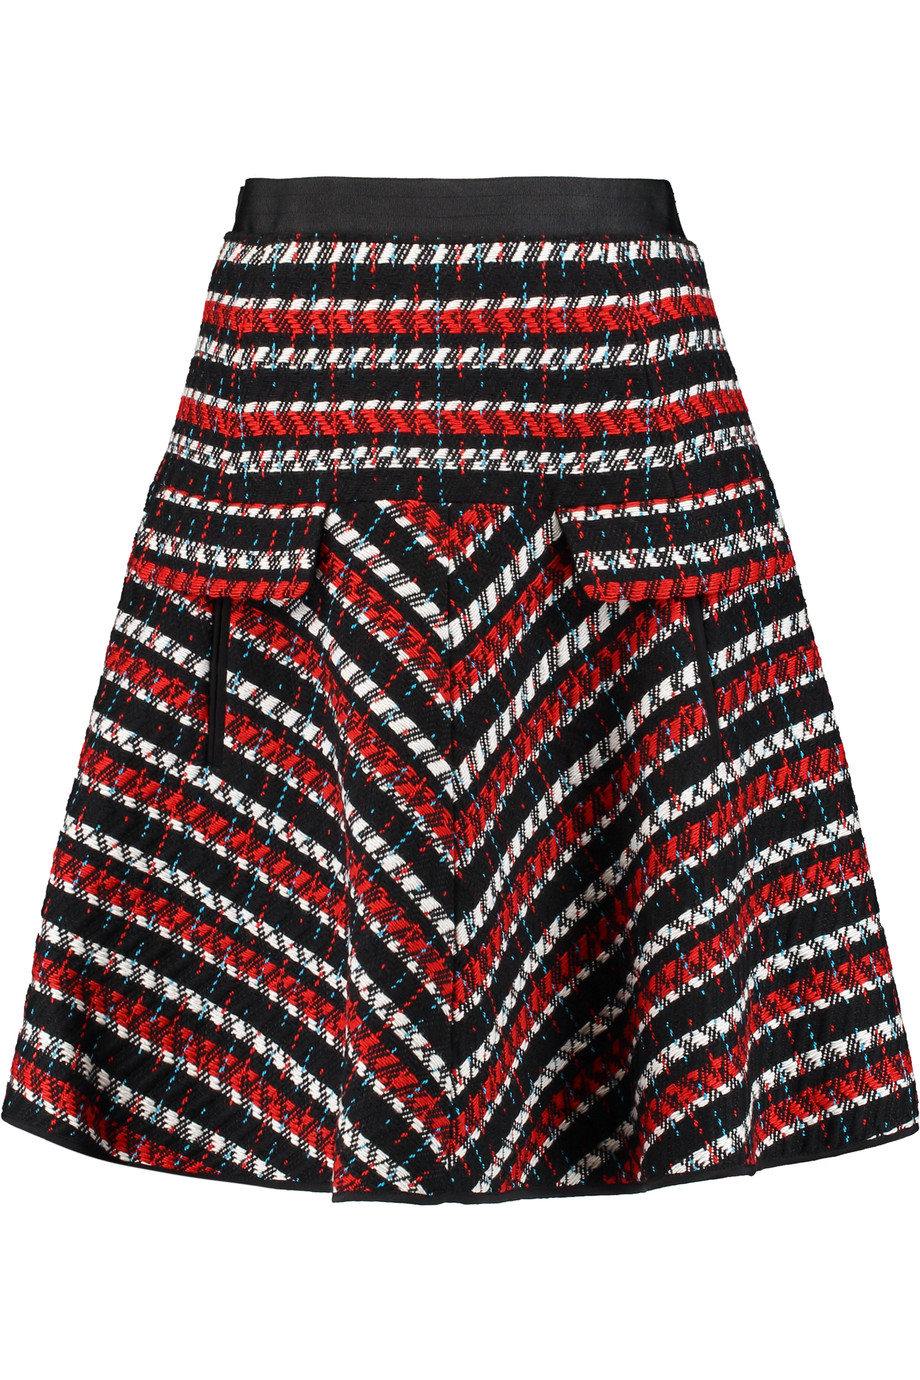 OSCAR DE LA RENTA Wool And Cotton-Blend Tweed Skirt | ModeSens